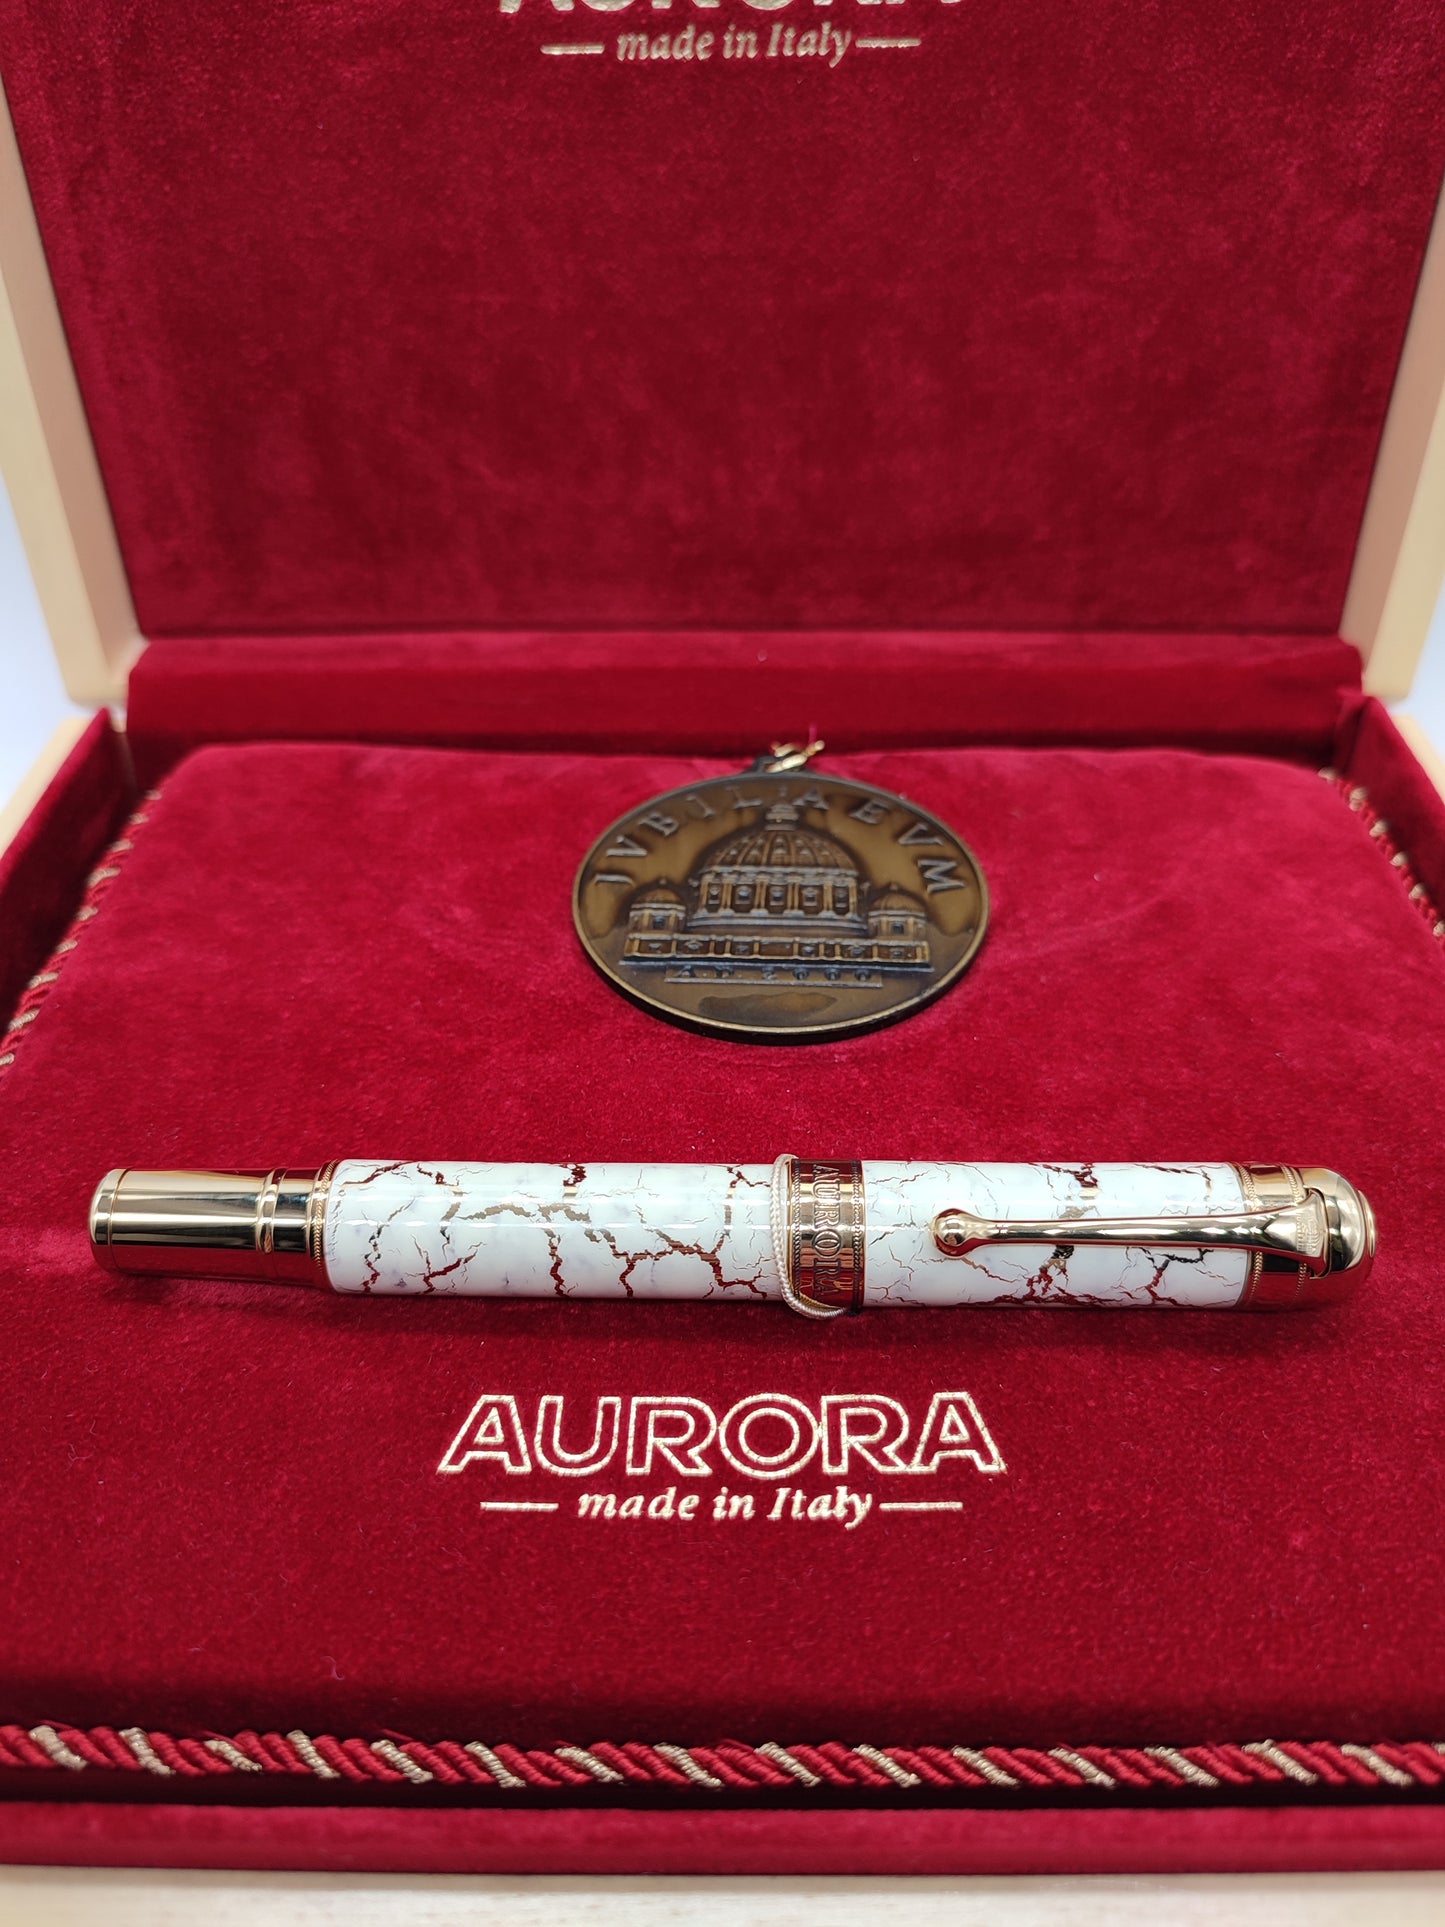 Aurora L.edition Jubilee AD 2000 pen box set in gold 1607/2000 pieces.